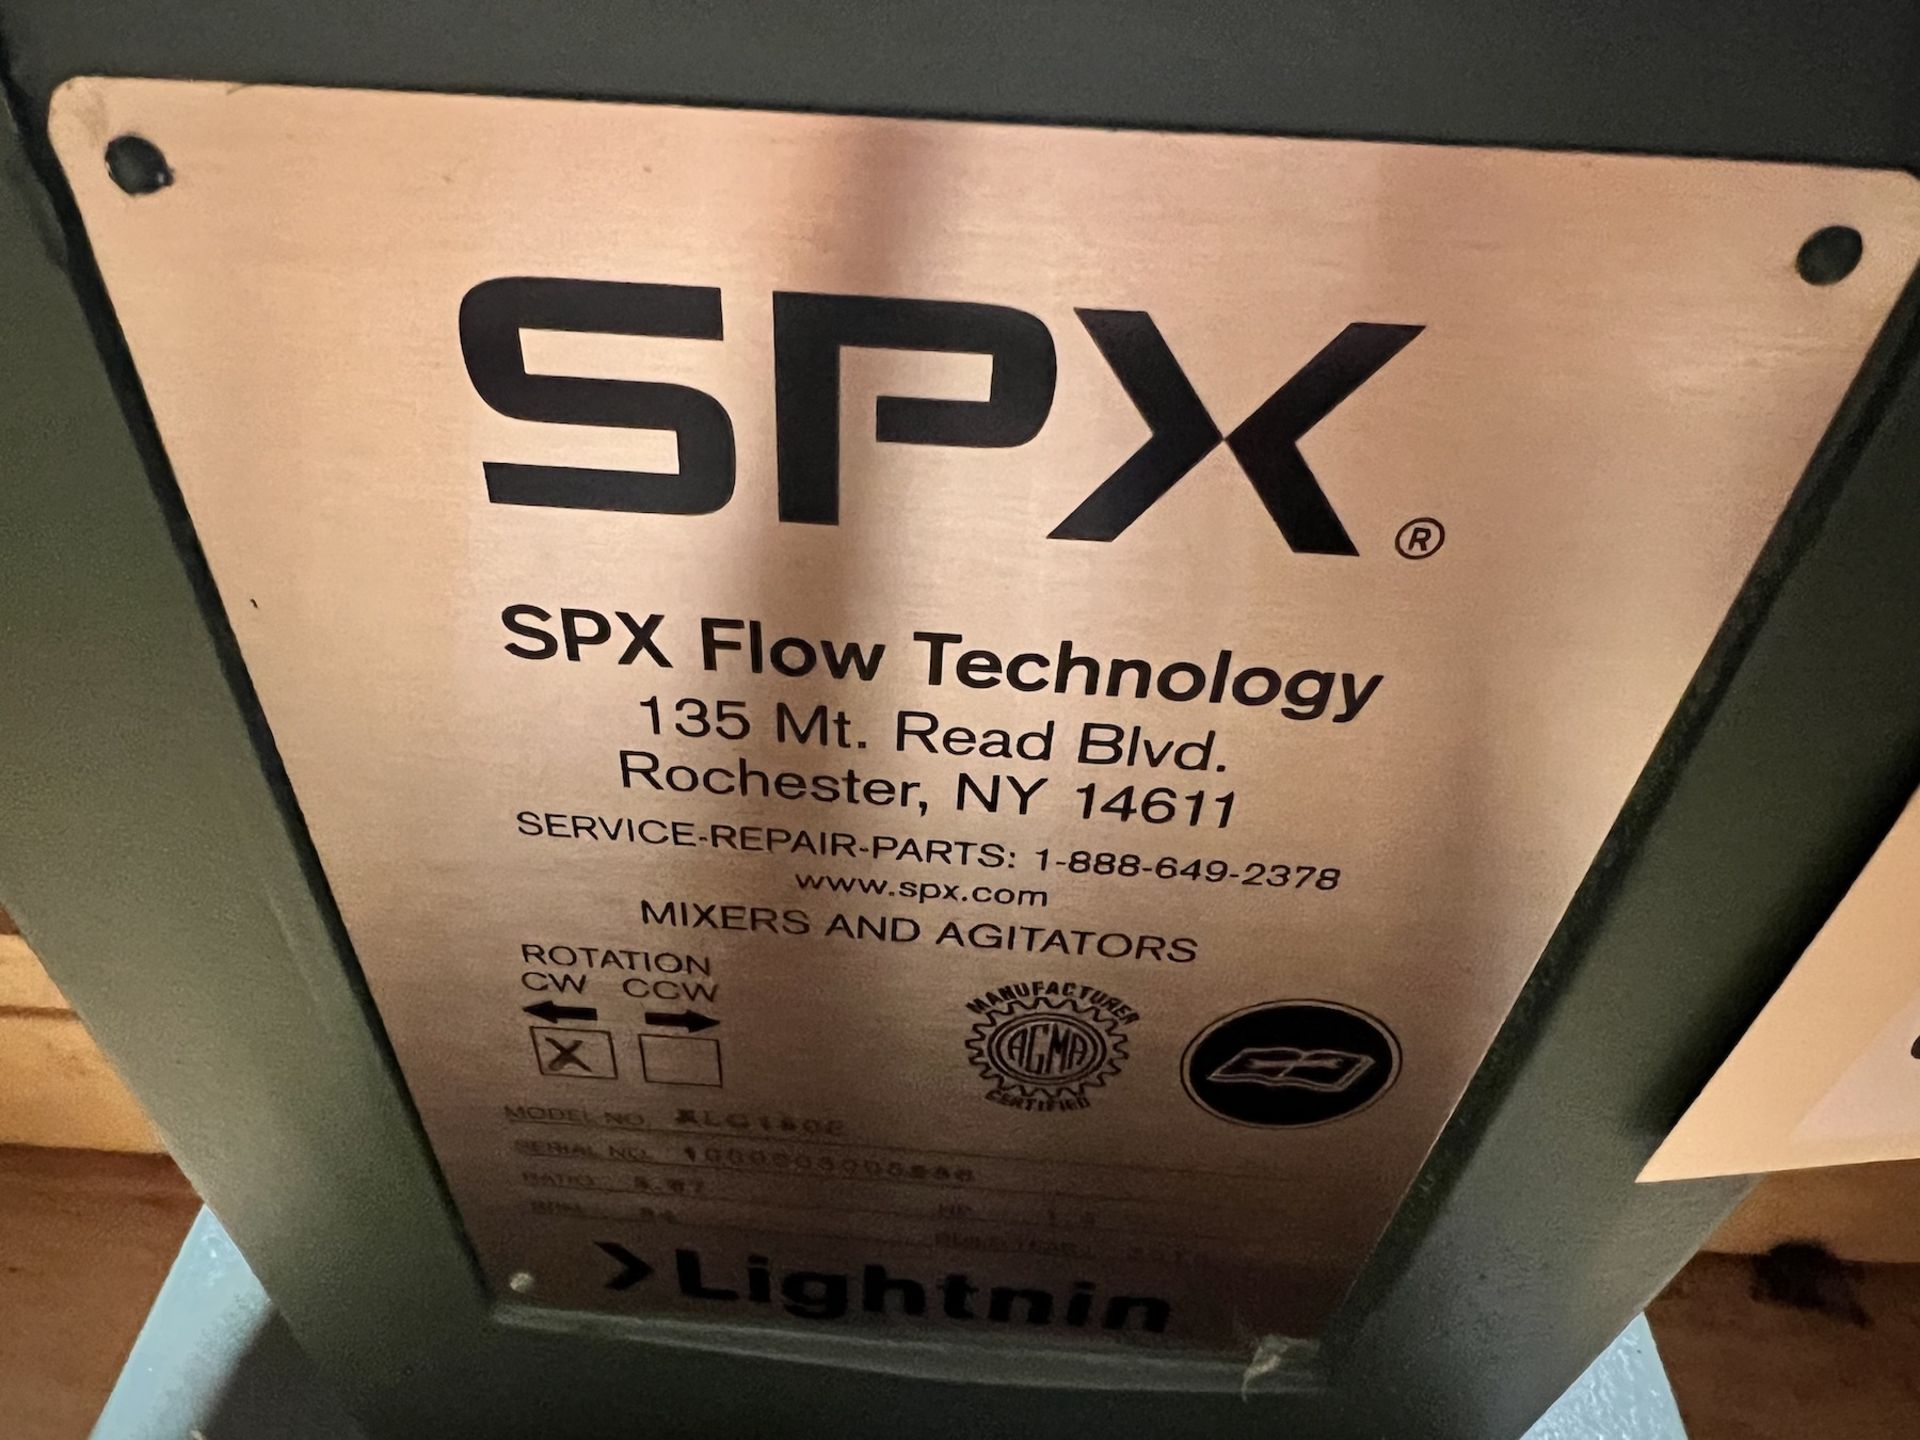 NEW SPX Lightnin Pedestal Mount Stationary Mixer Model # XLC150F, Ratio 5.07, 1.5 HP, RPM 84 - Image 4 of 9